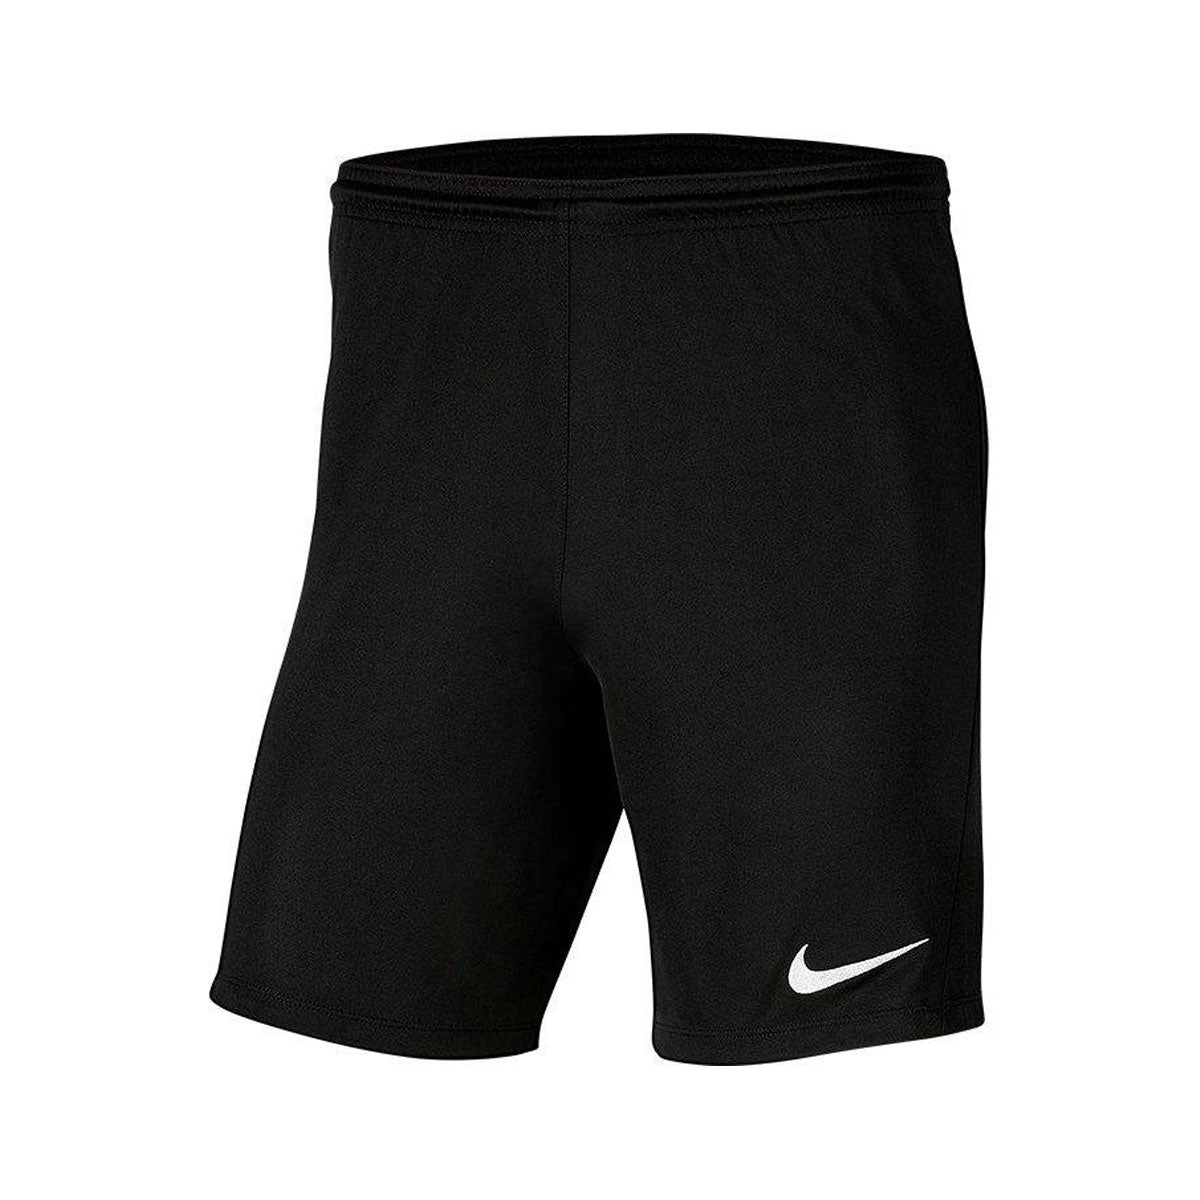 Nike Men's Dry Park III Running Football Shorts